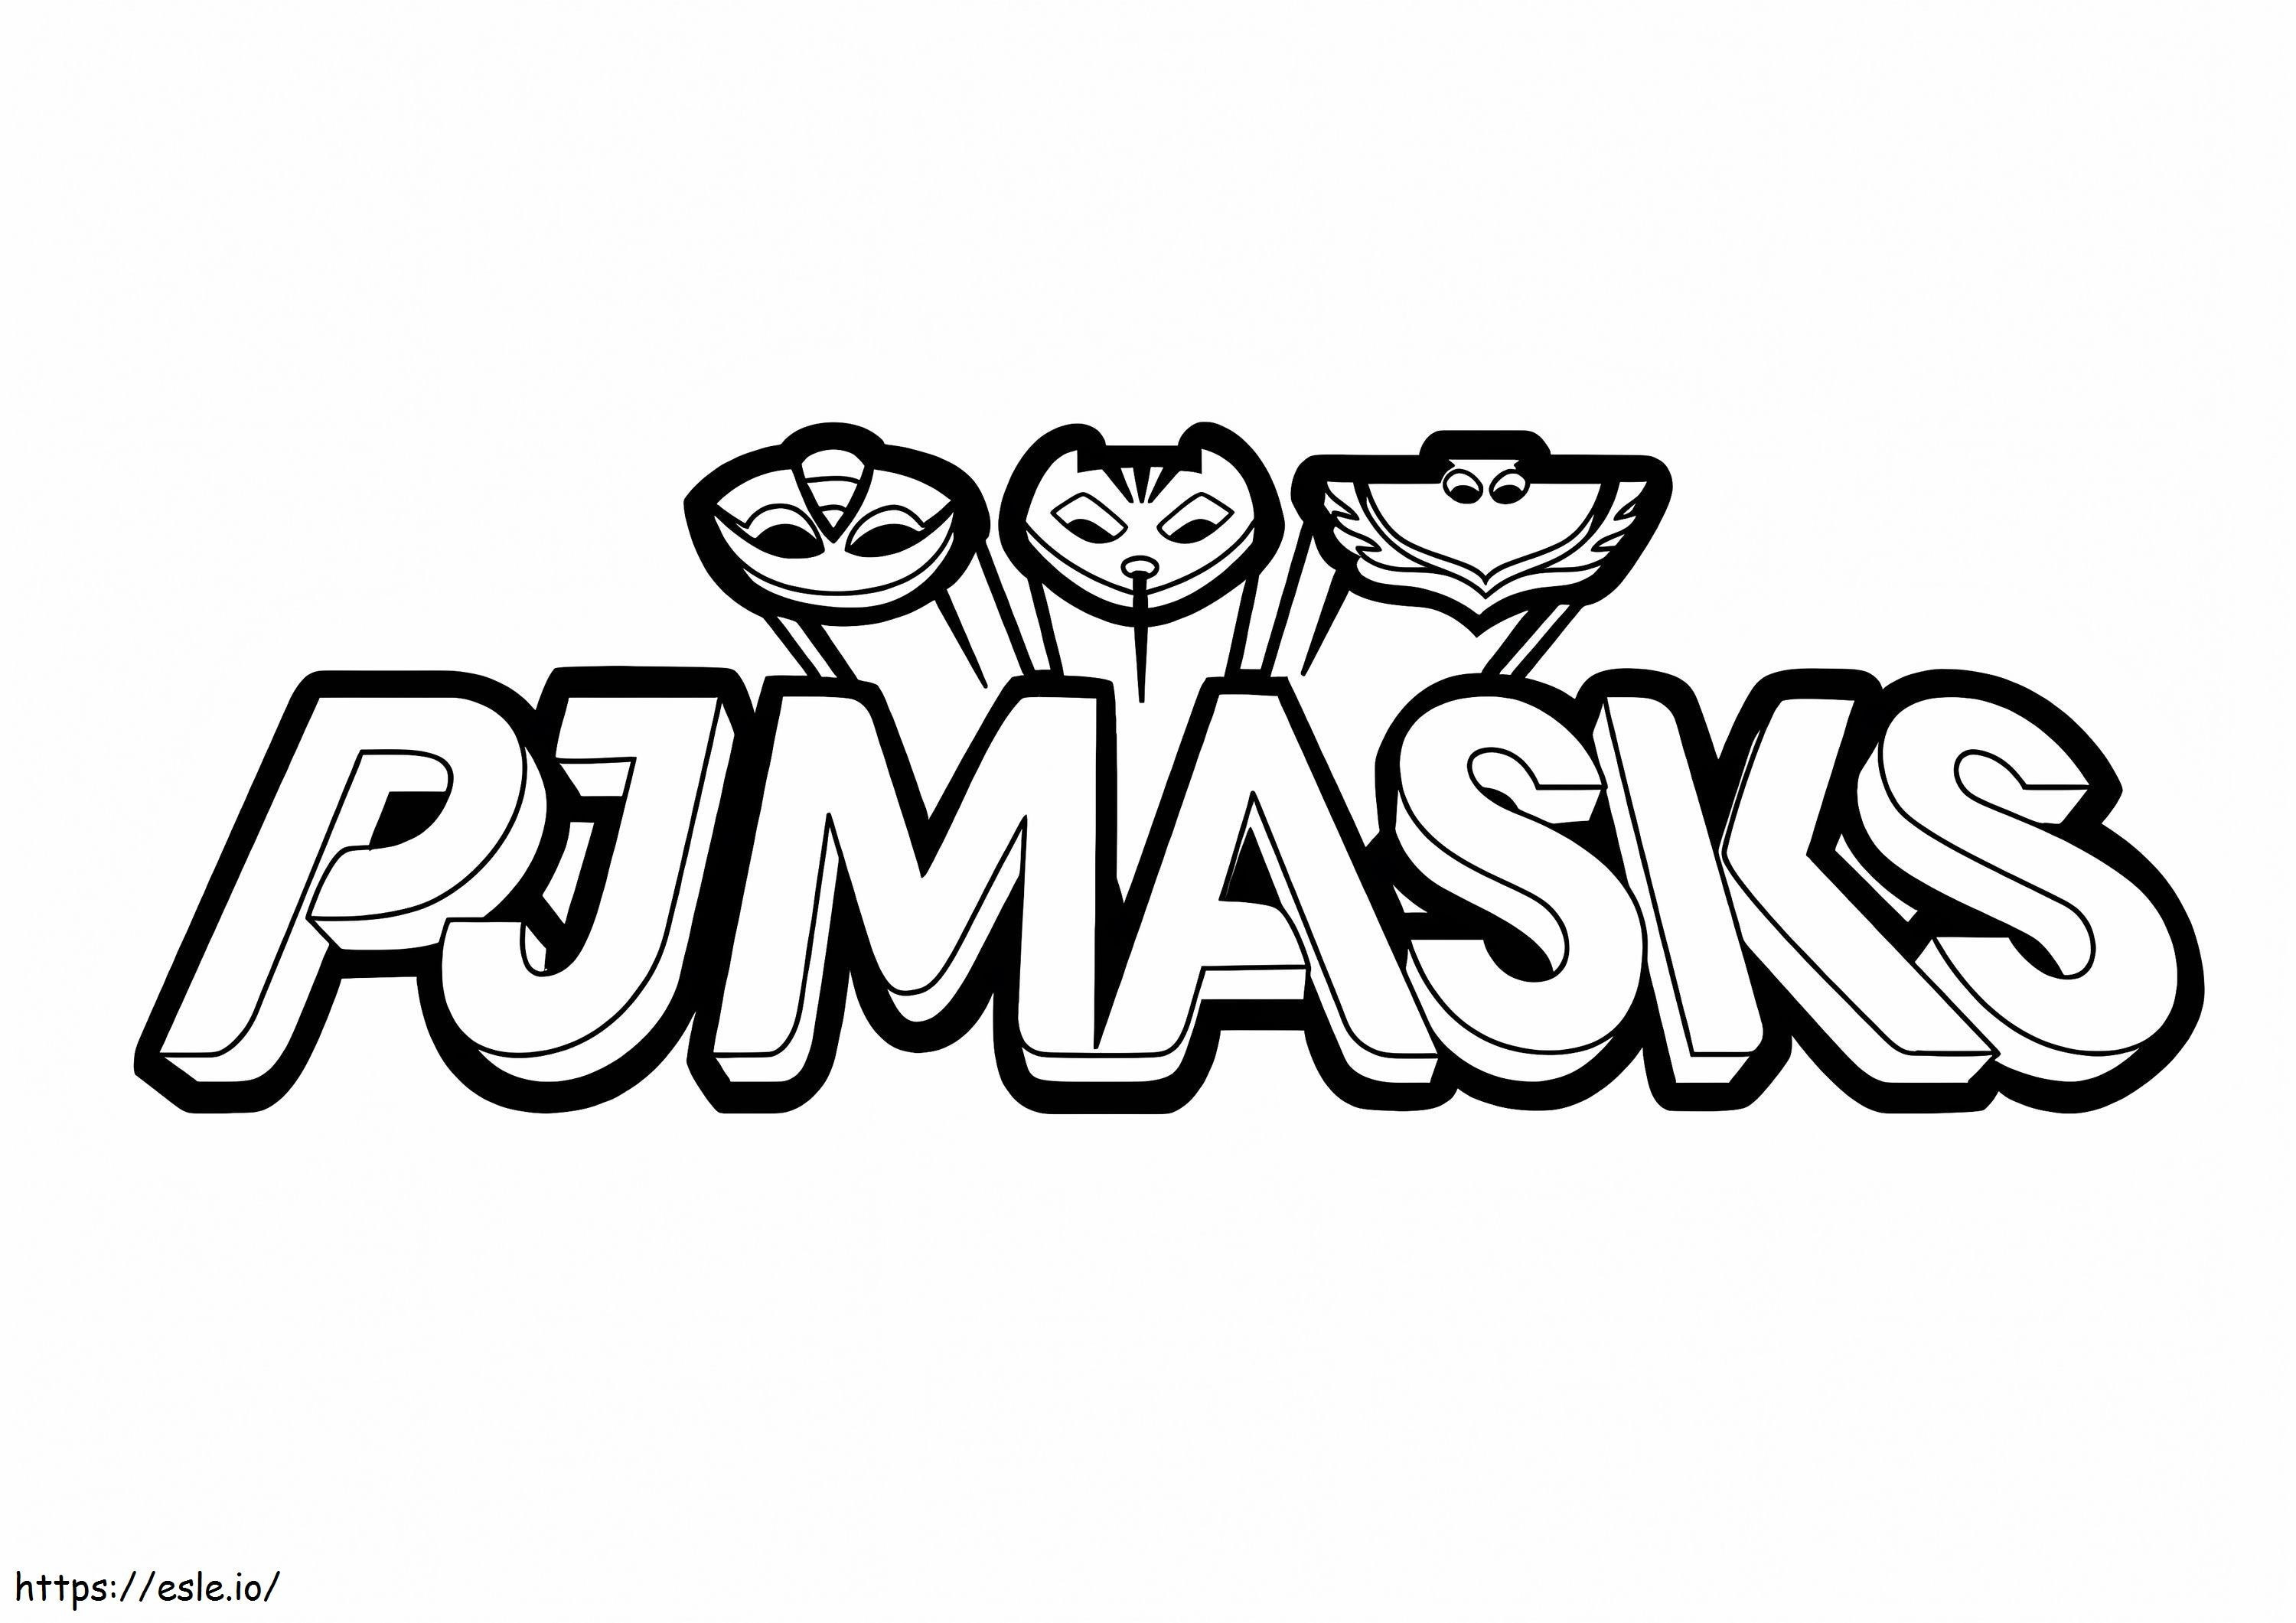 Logo Masker PJ Gambar Mewarnai